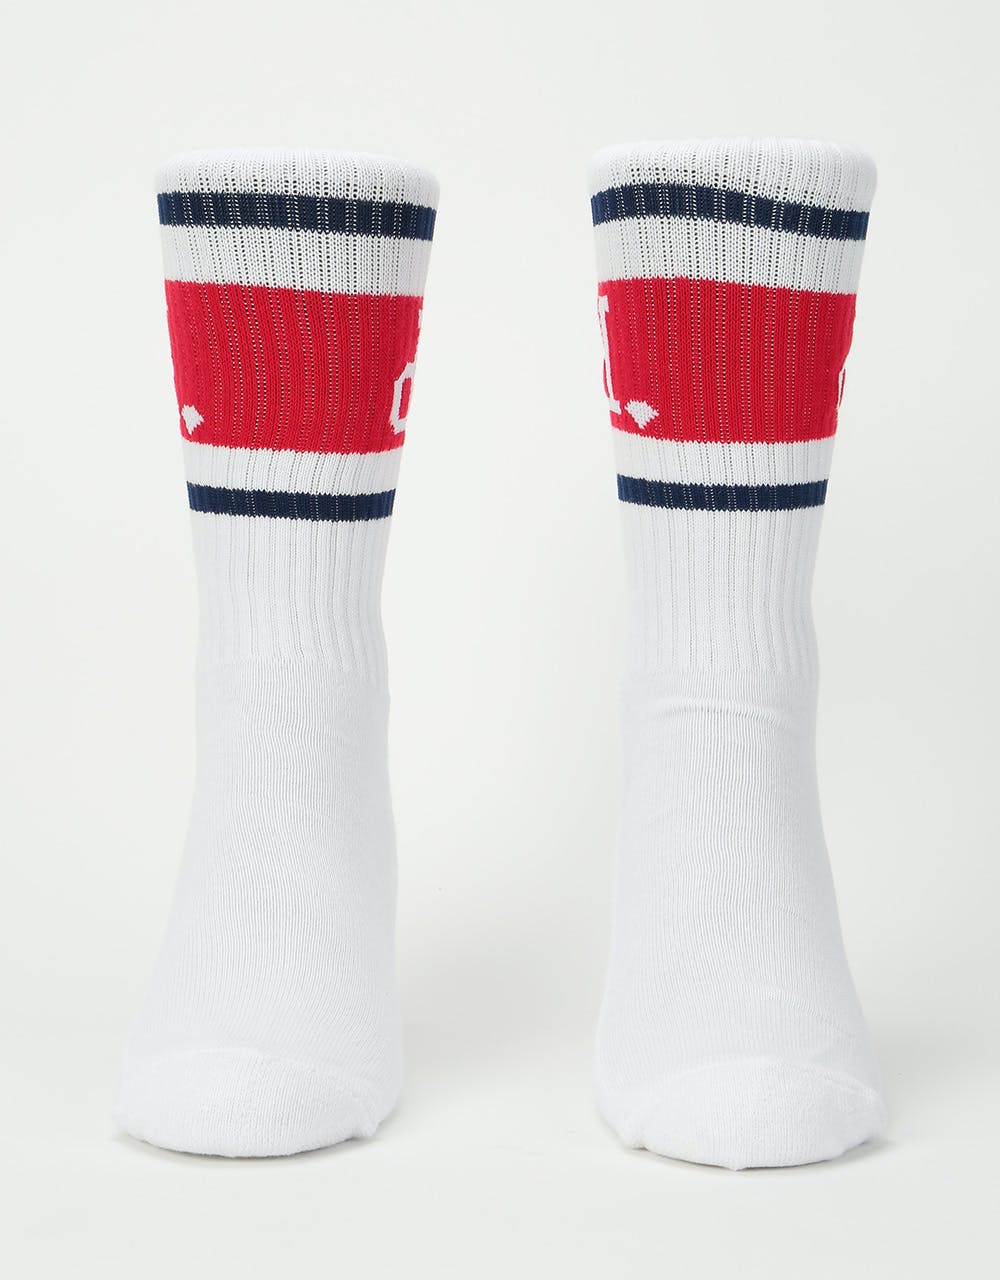 Diamond Supply Co. Un Polo Hgh Top Socks - White/Red